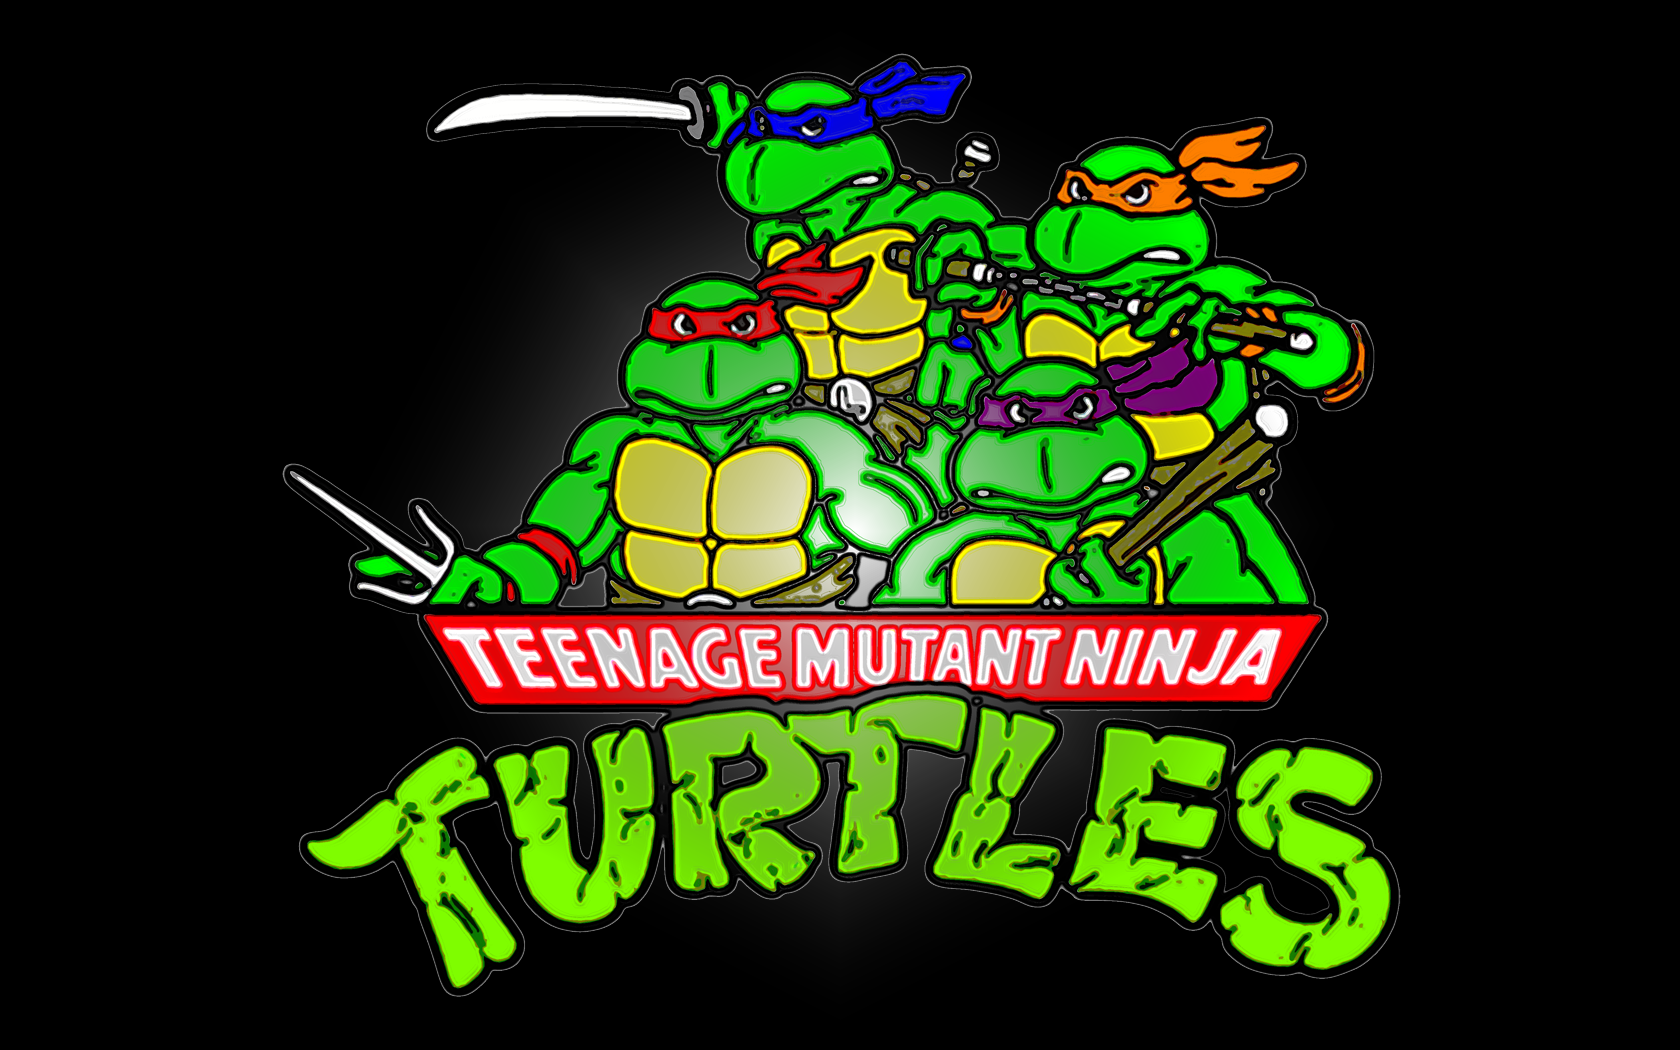 Download teenage mutant ninja turtles theme song